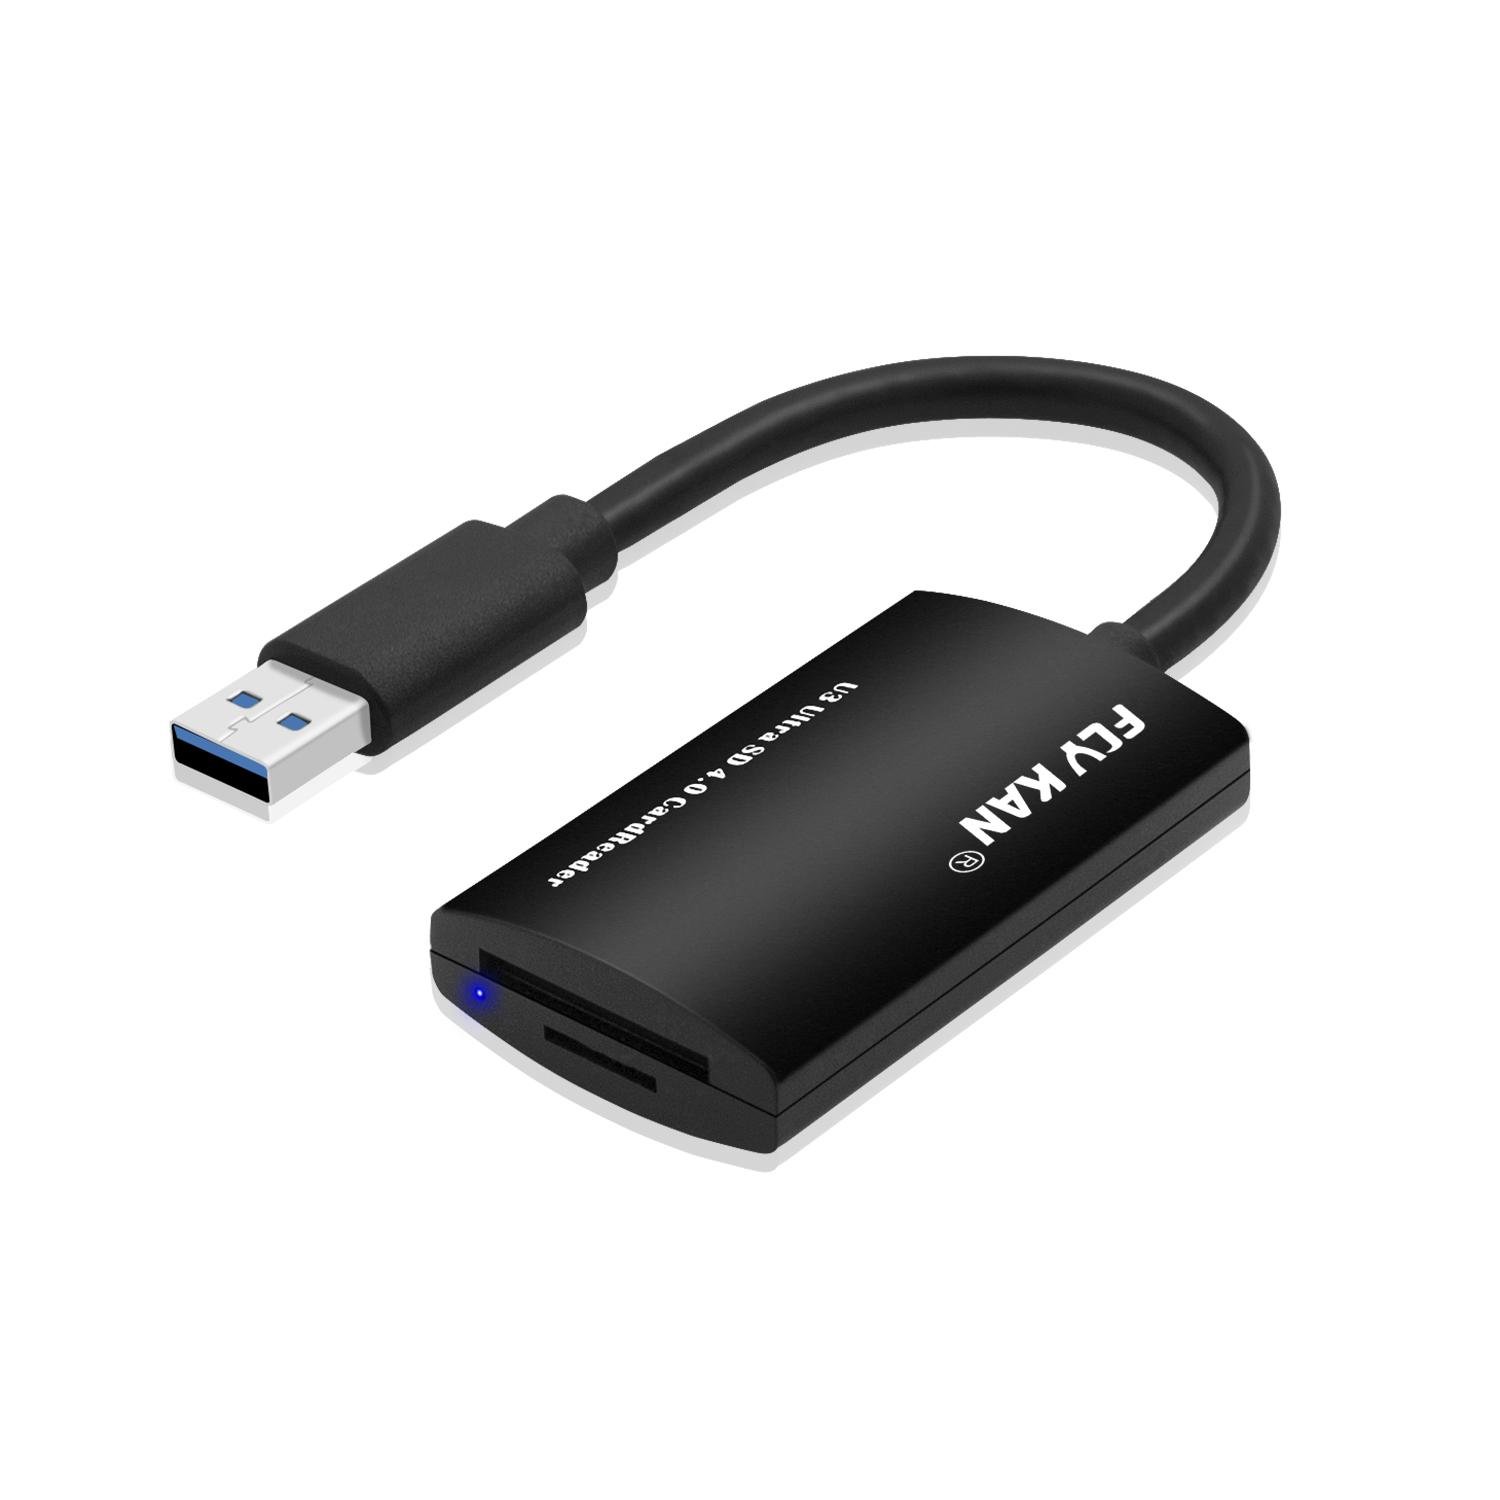 Fly Kan UHS-II Dual Slot USB 3.0 Memory Card Reader SD 4.0 for DSLR